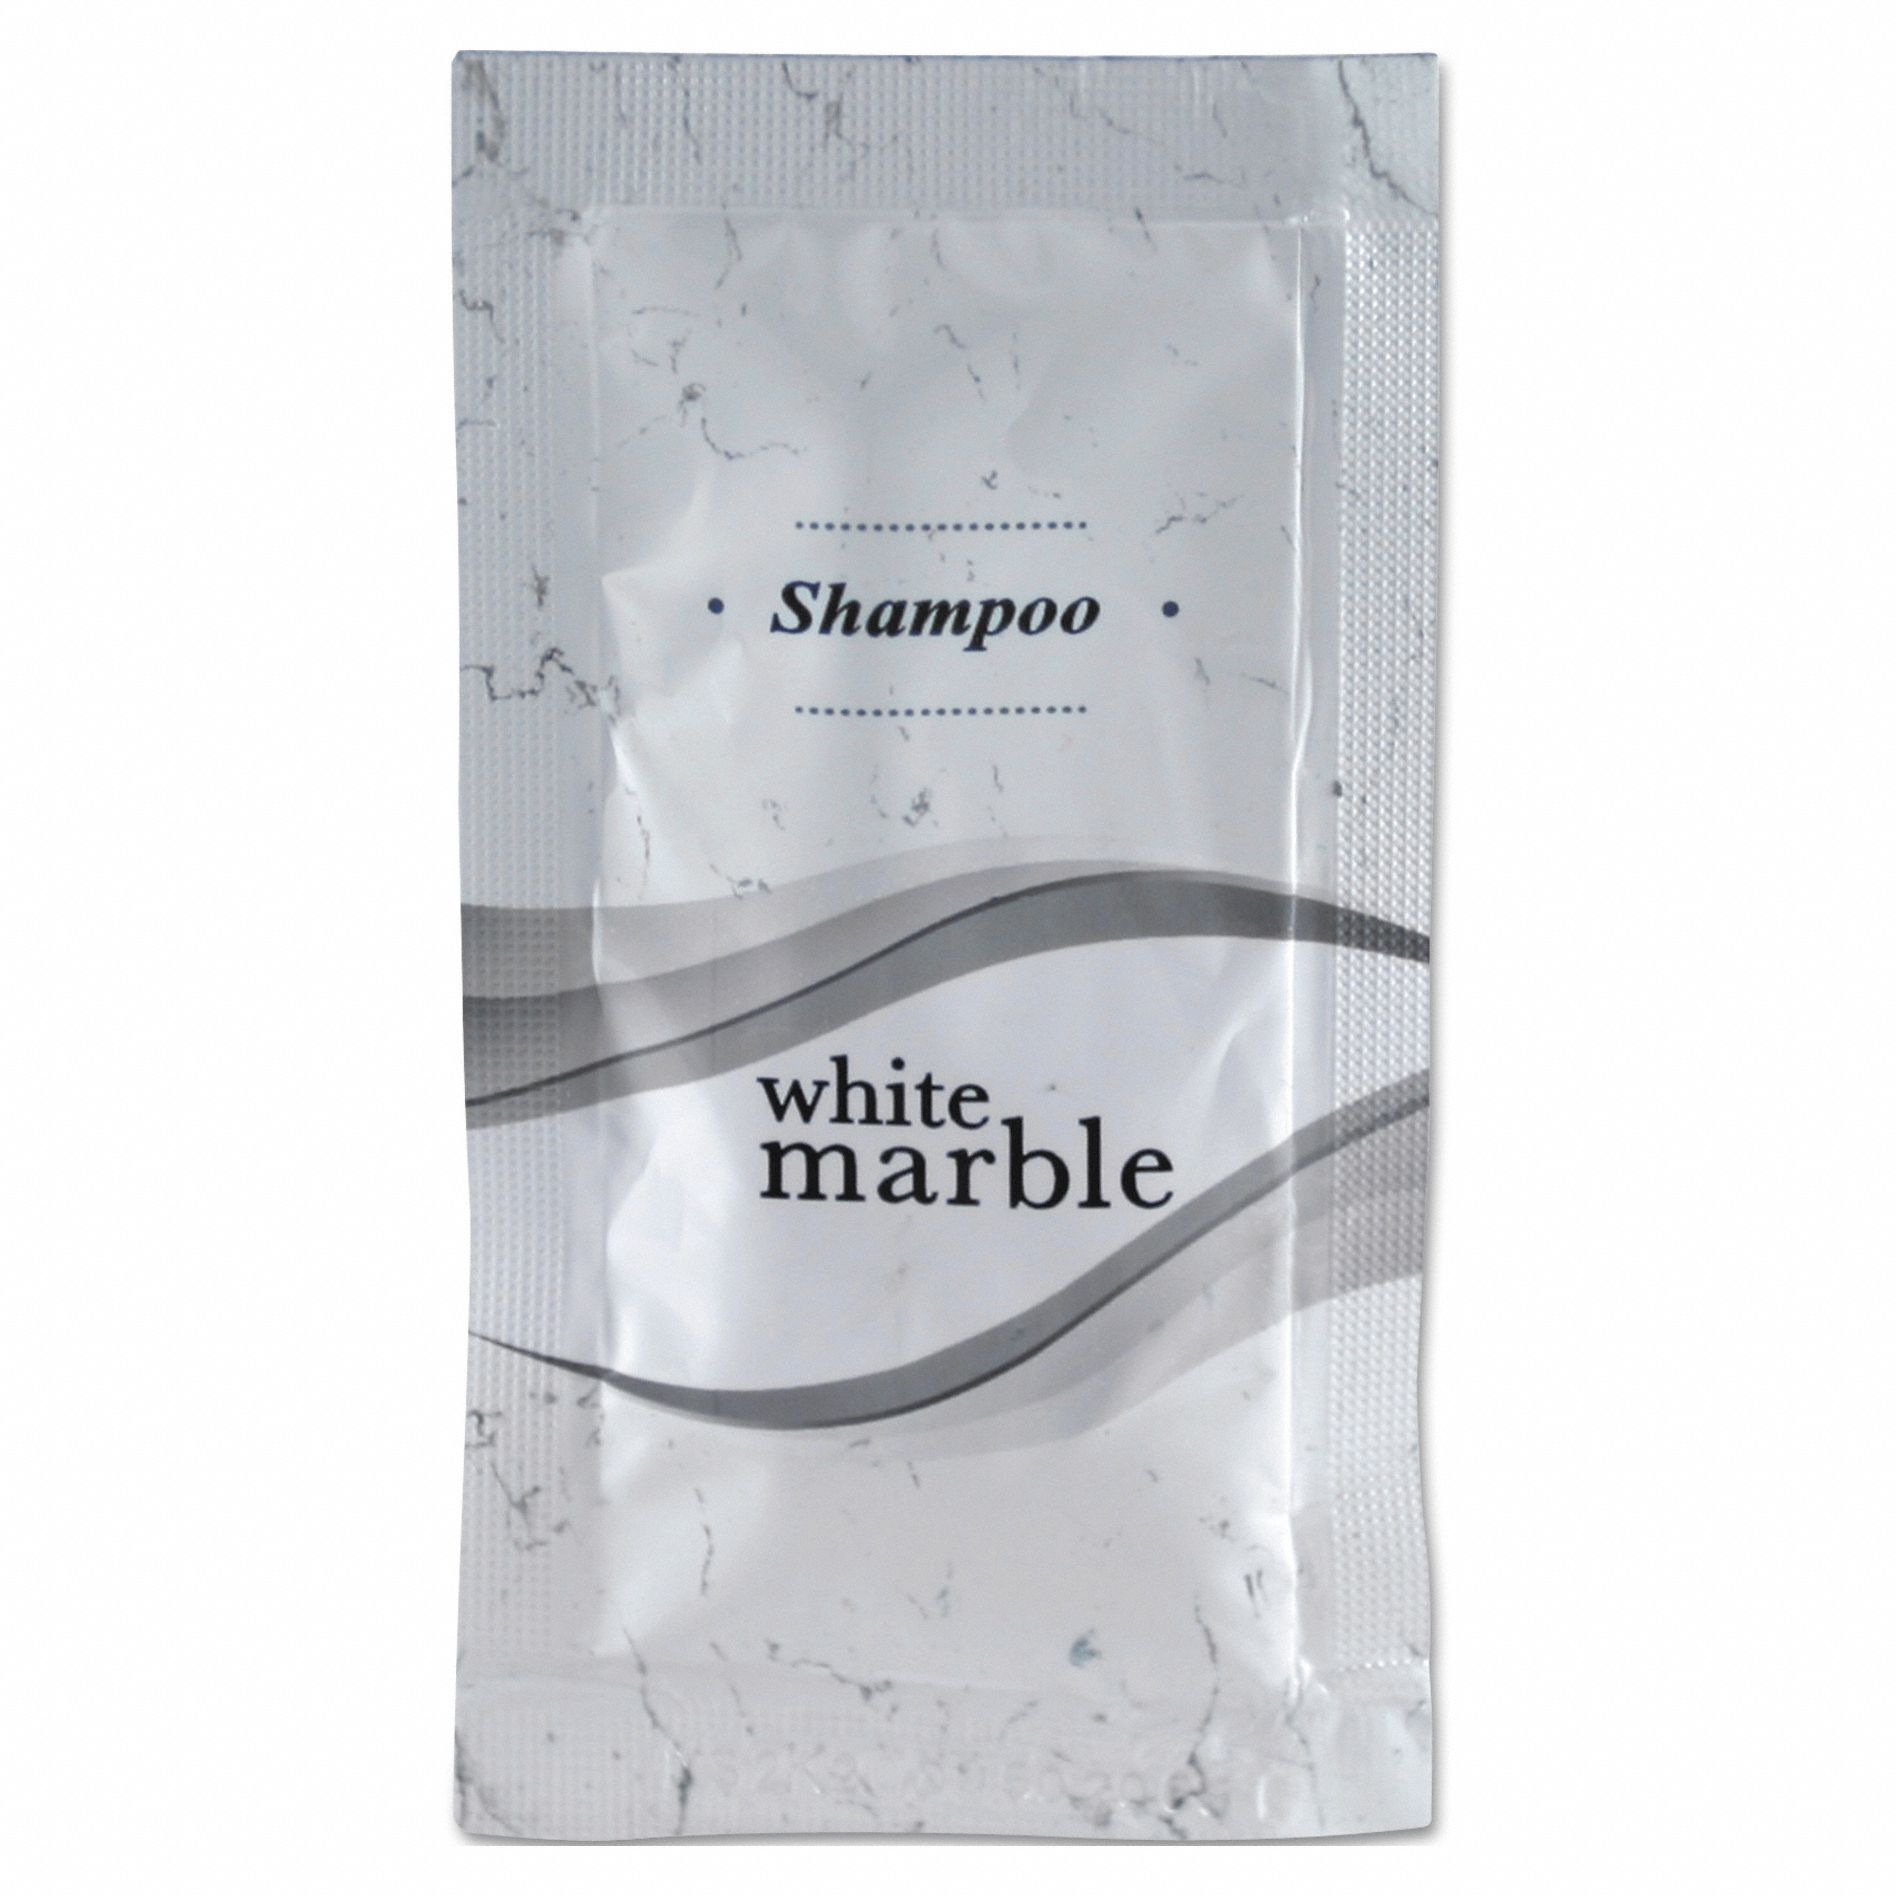 Shampoo: Pack, 0.25 oz, Fresh Fragrance, 500 PK